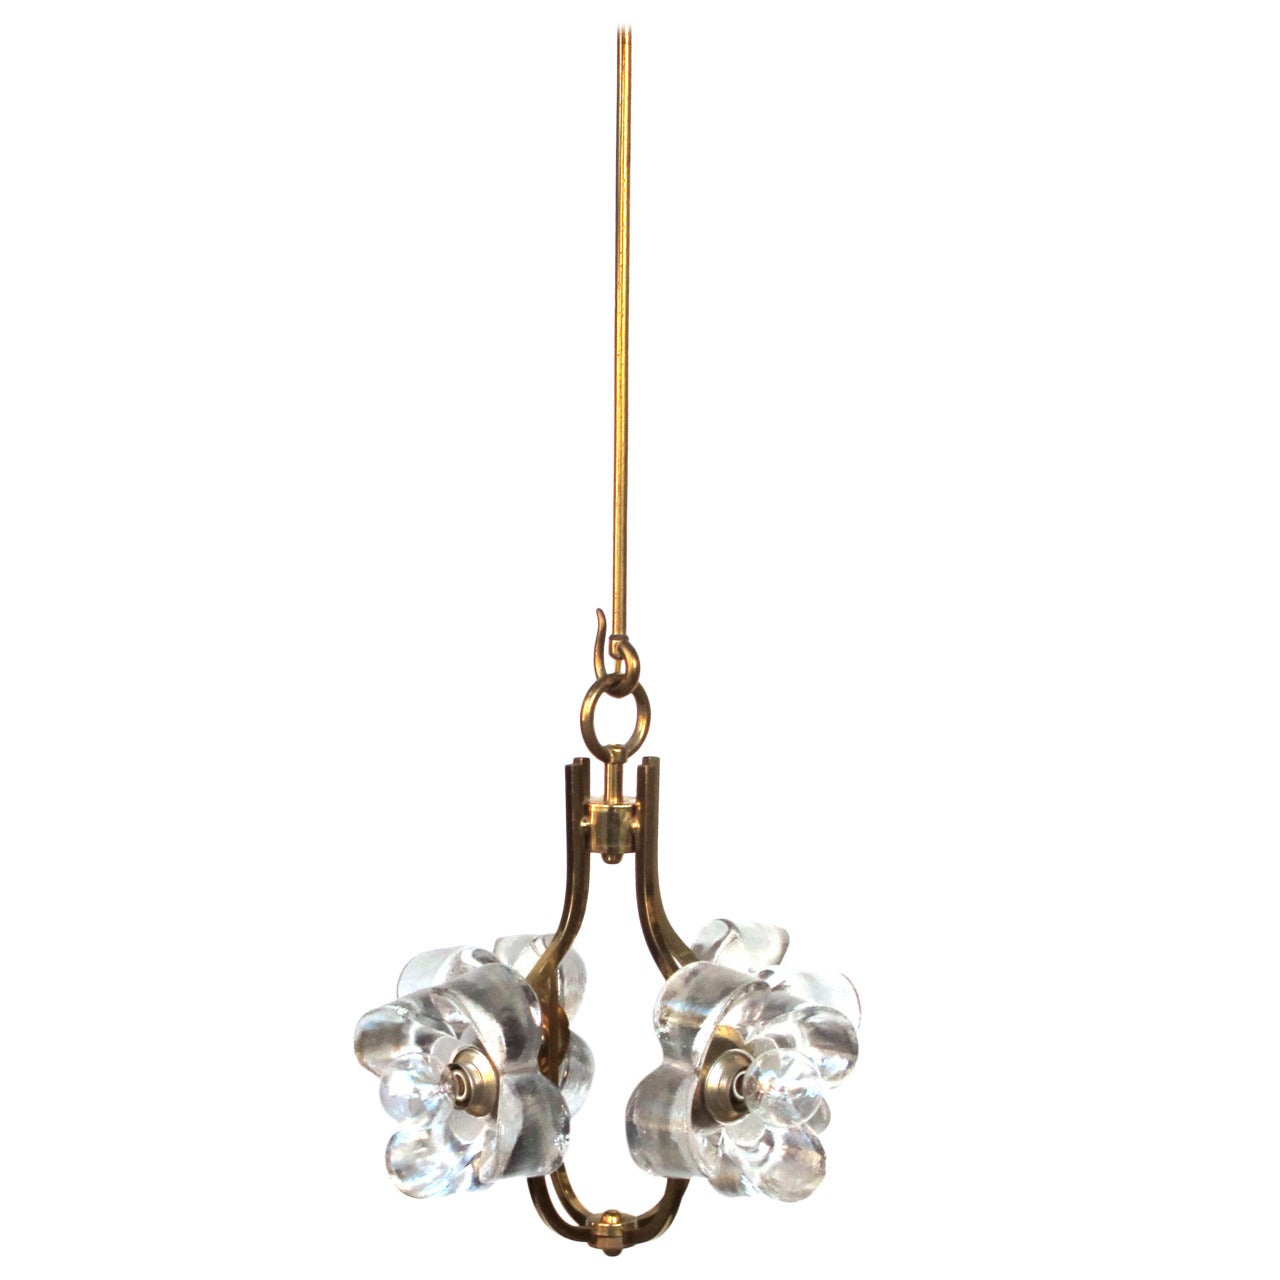 Italian Brass Four-Light Chandelier with Molded Glass Flowers by AV Mazzega